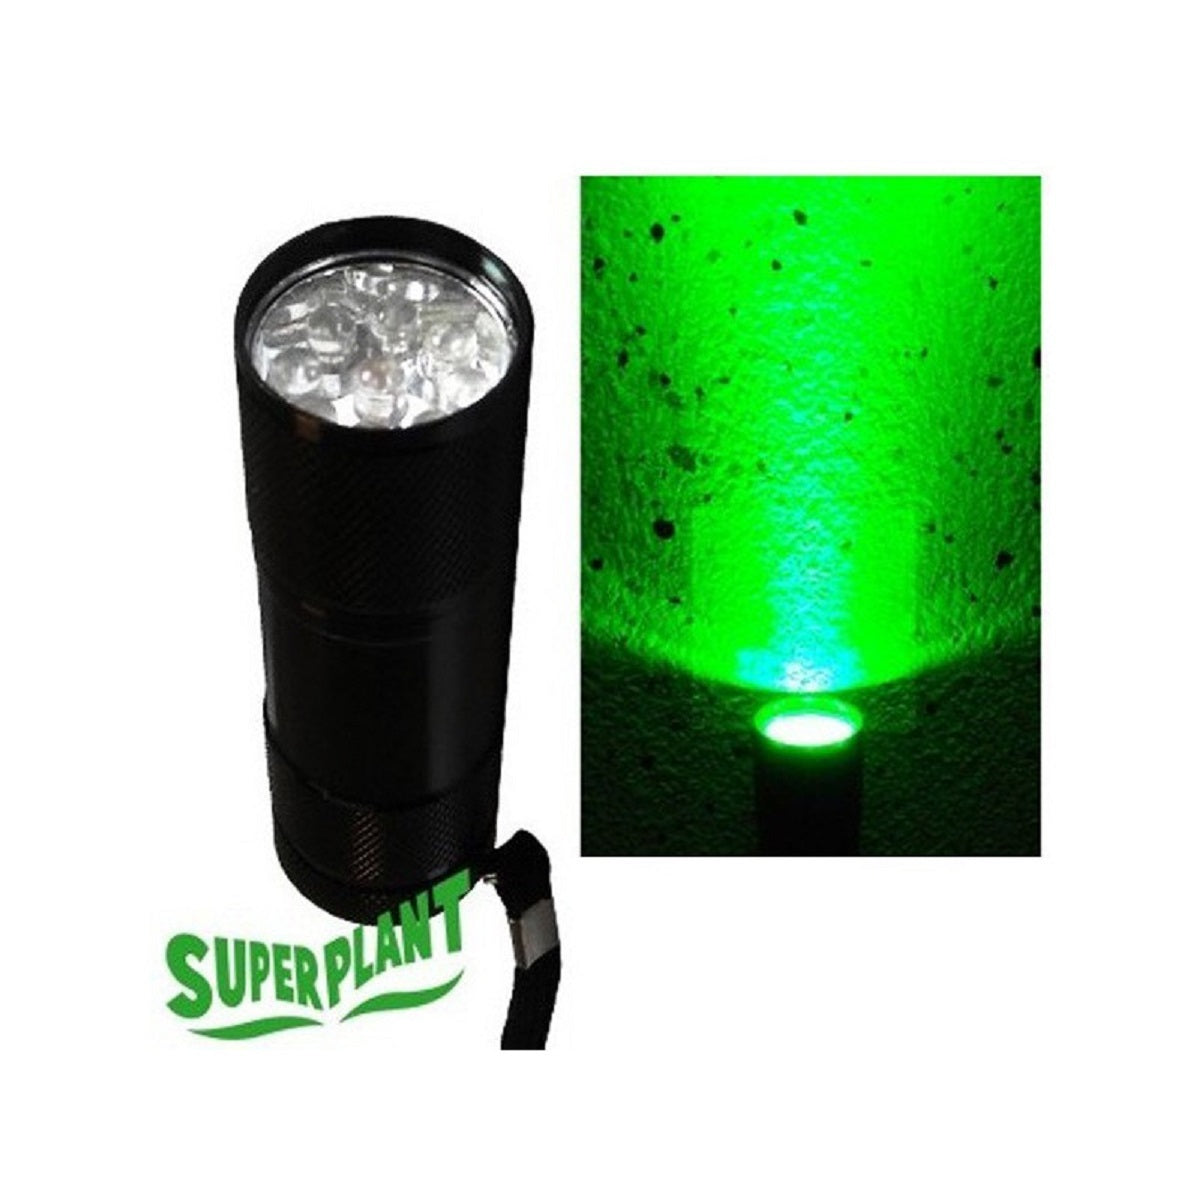 Superplant Green Light lampe nocturne